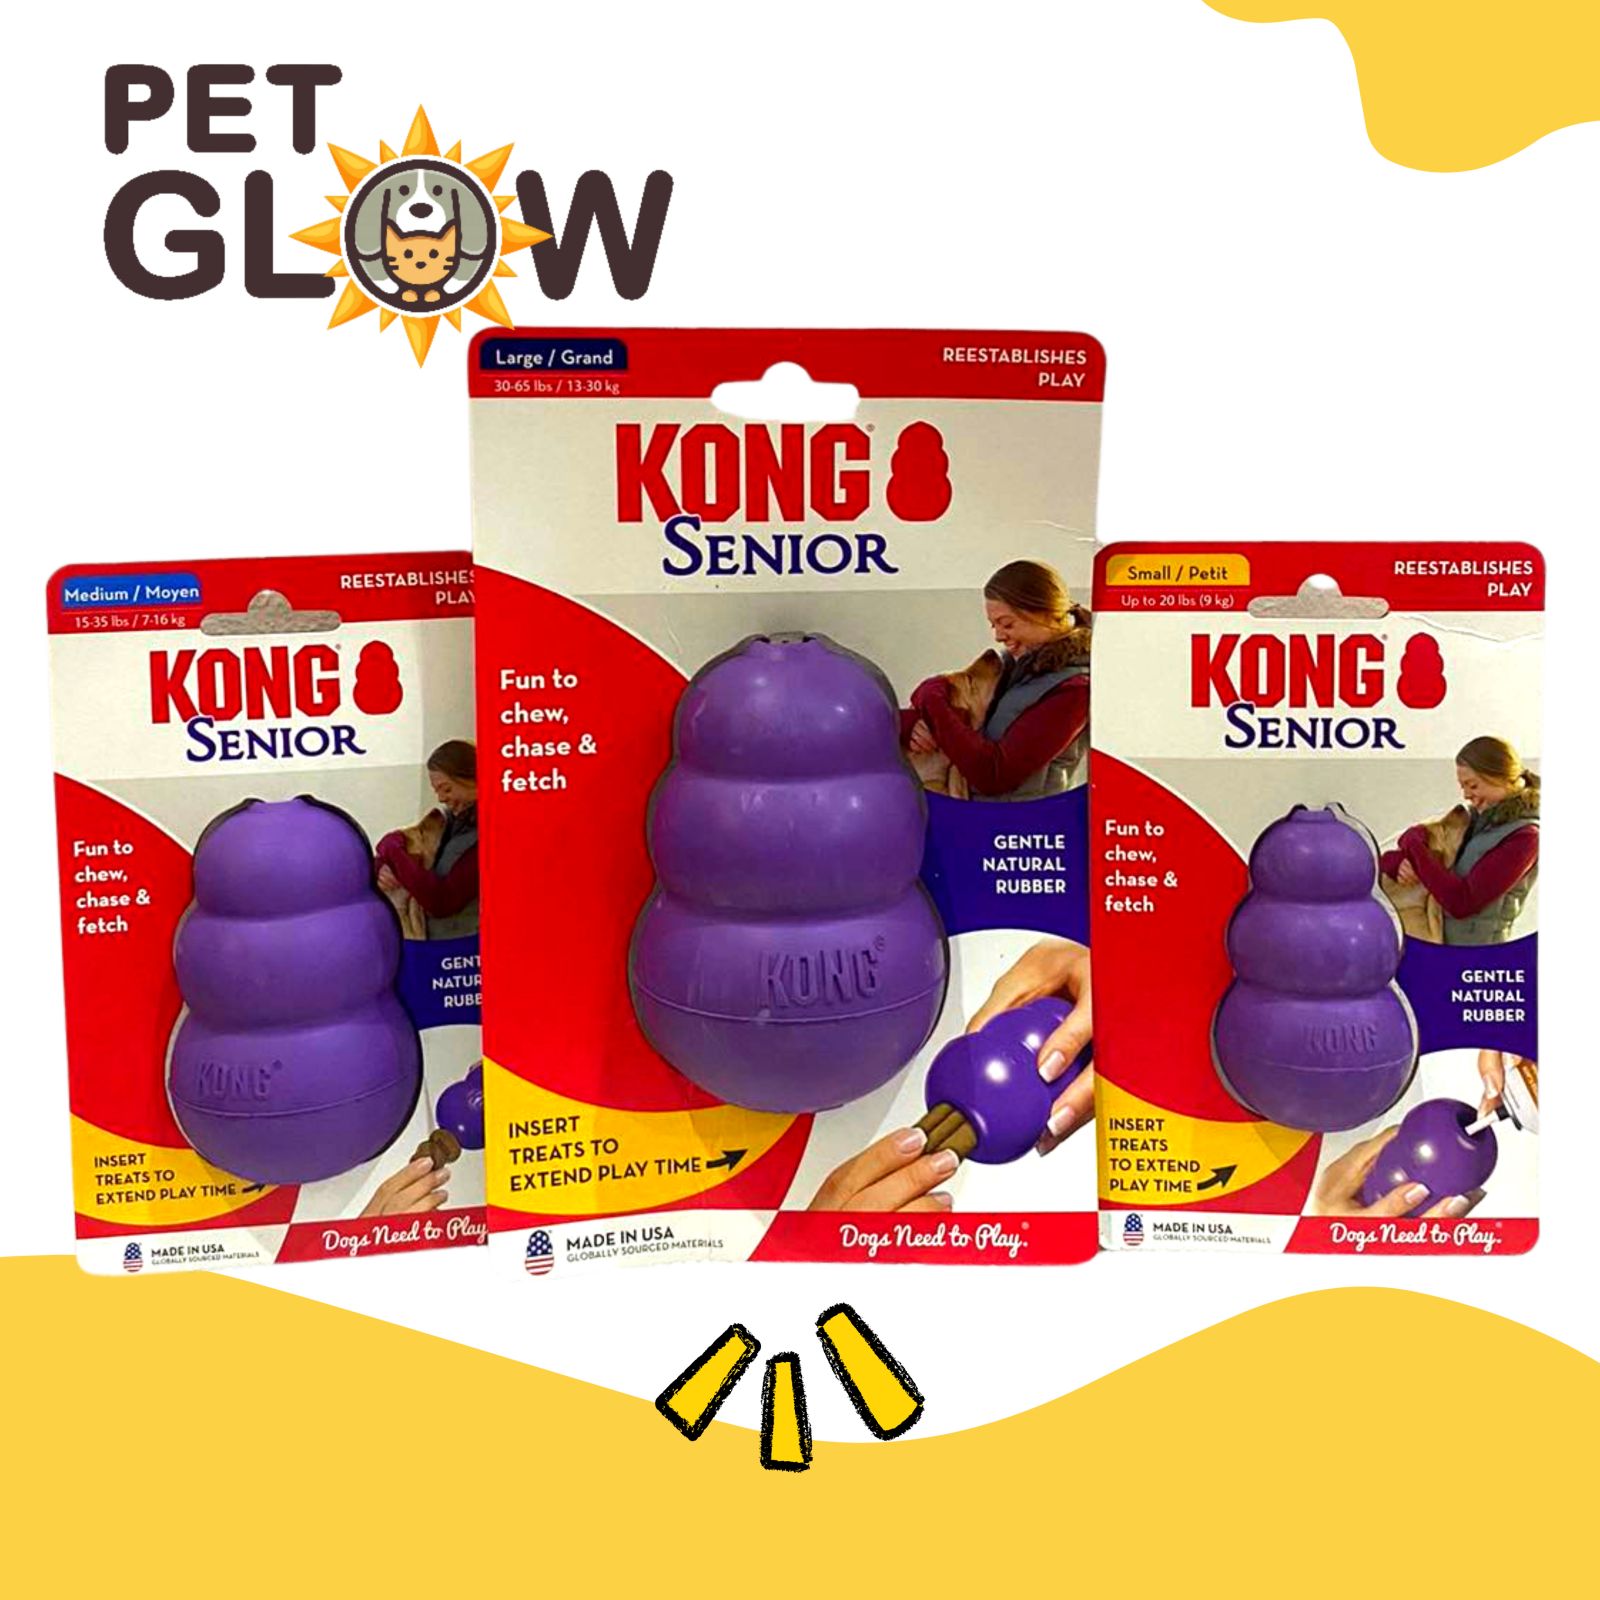 KONG - Senior Dog Toy - Gentle Natural Rubber  